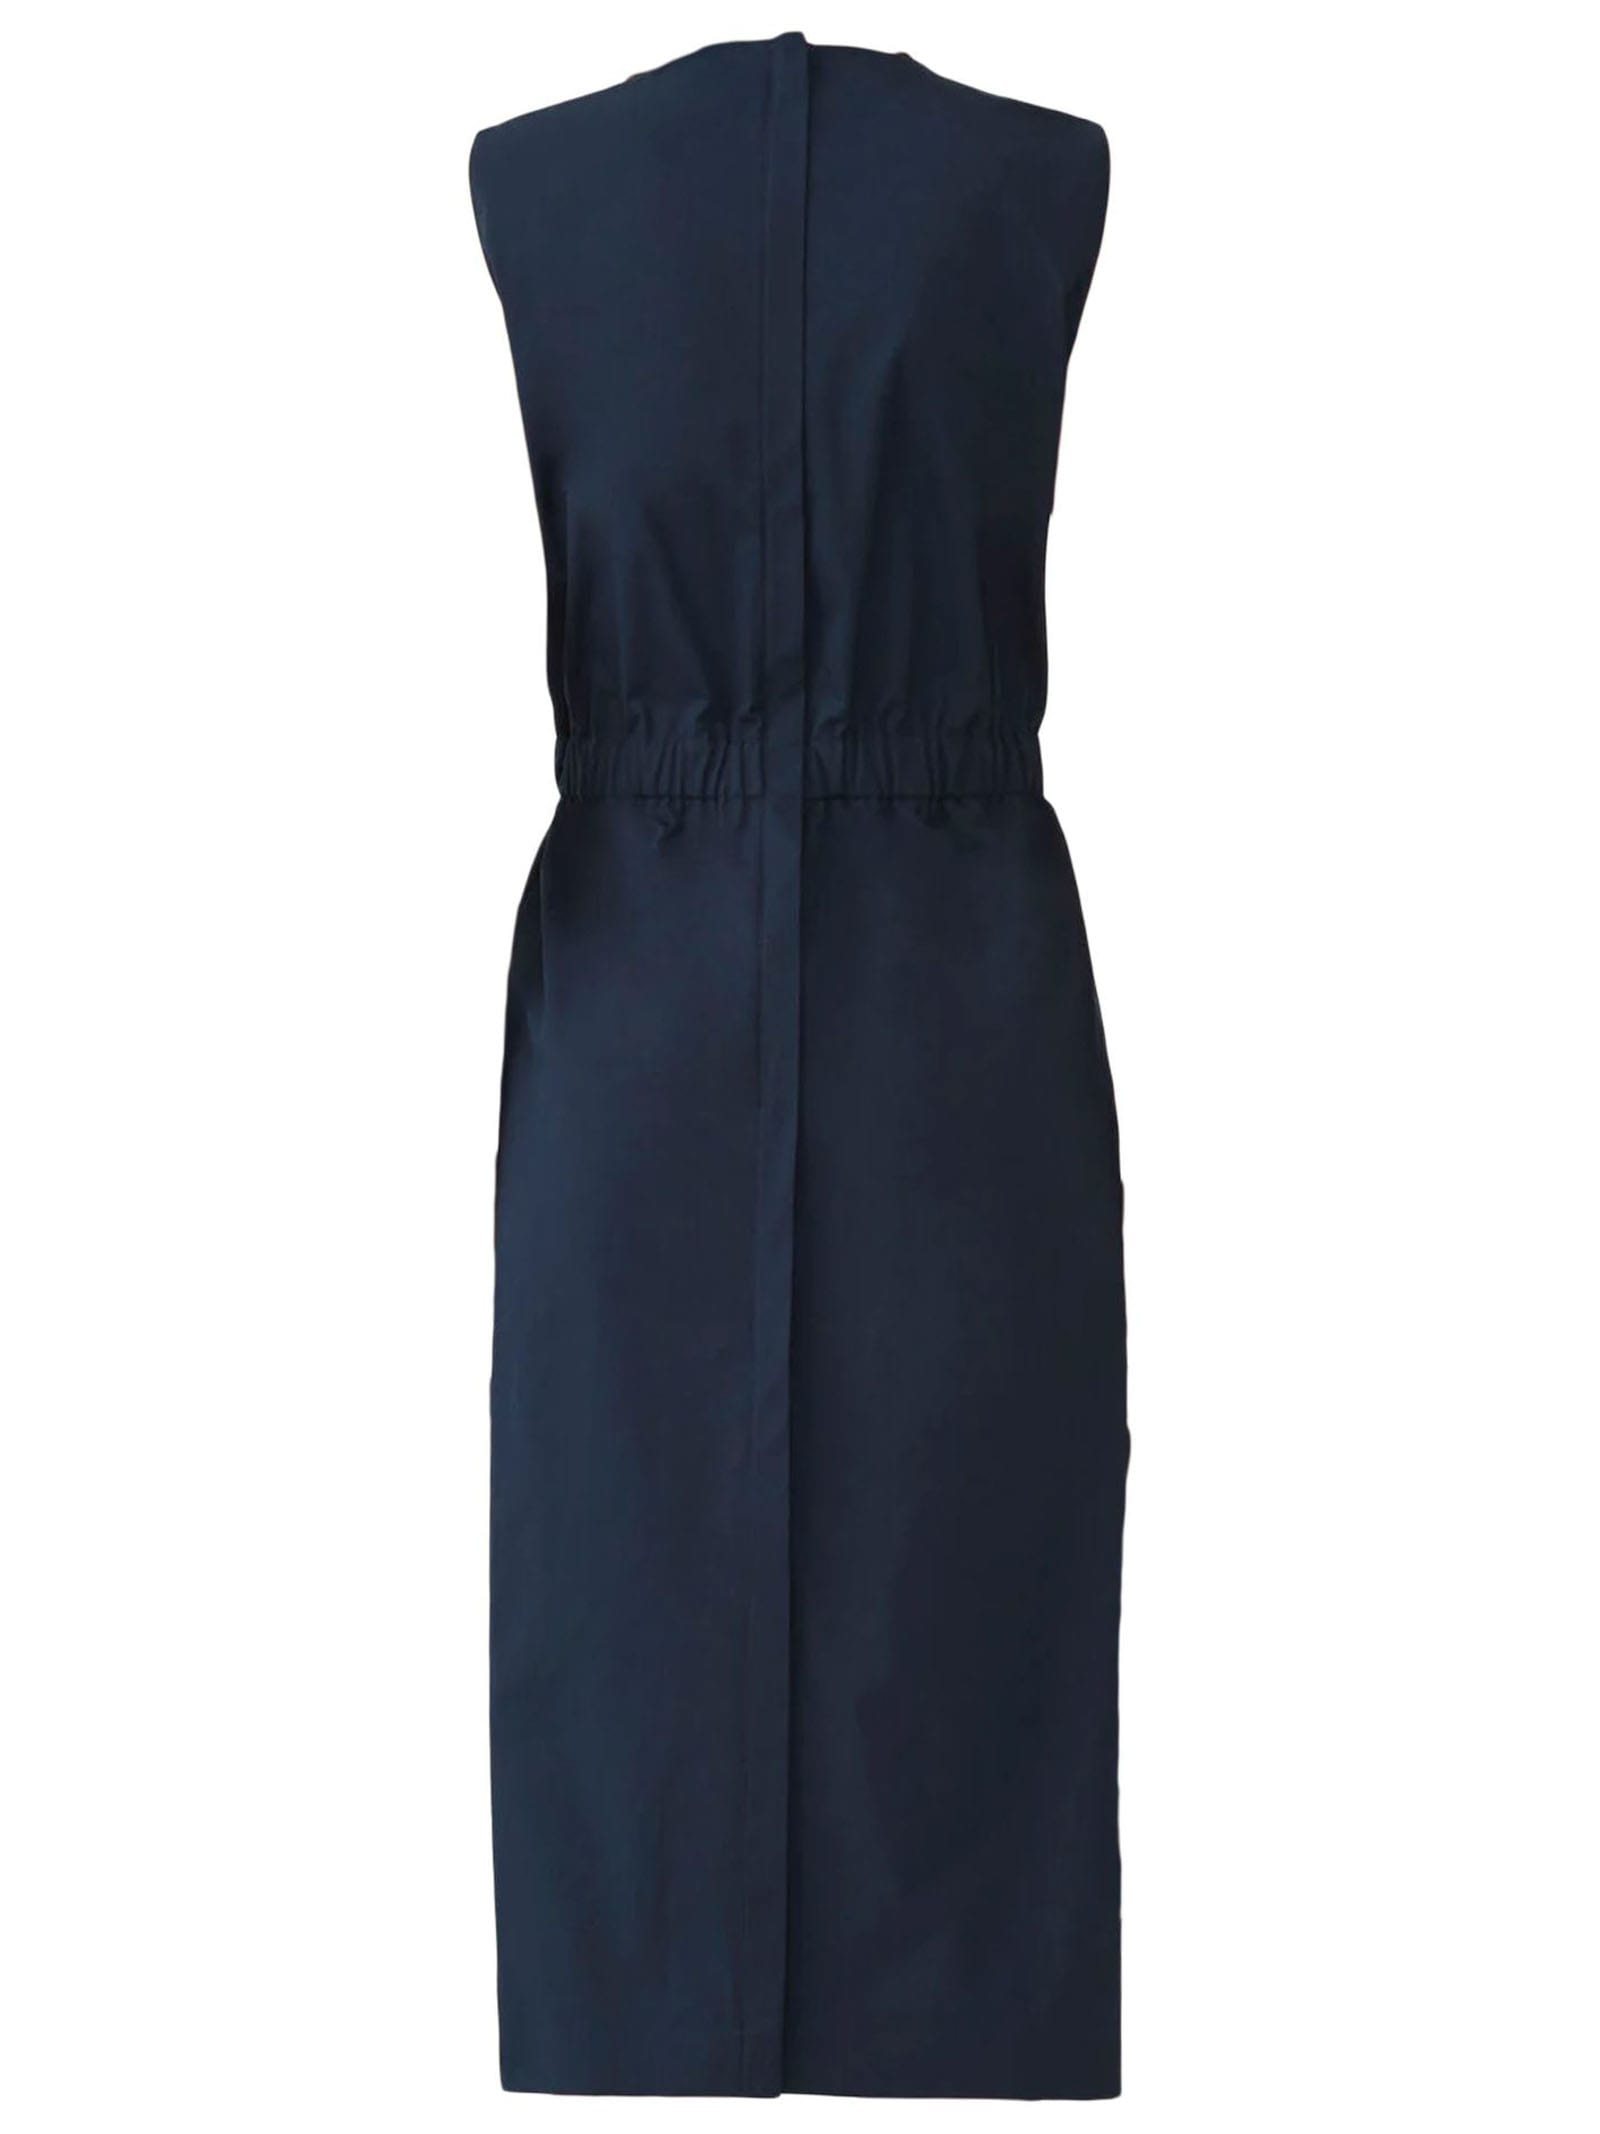 Shop Fabiana Filippi Navy Blue Cotton Midi Dress